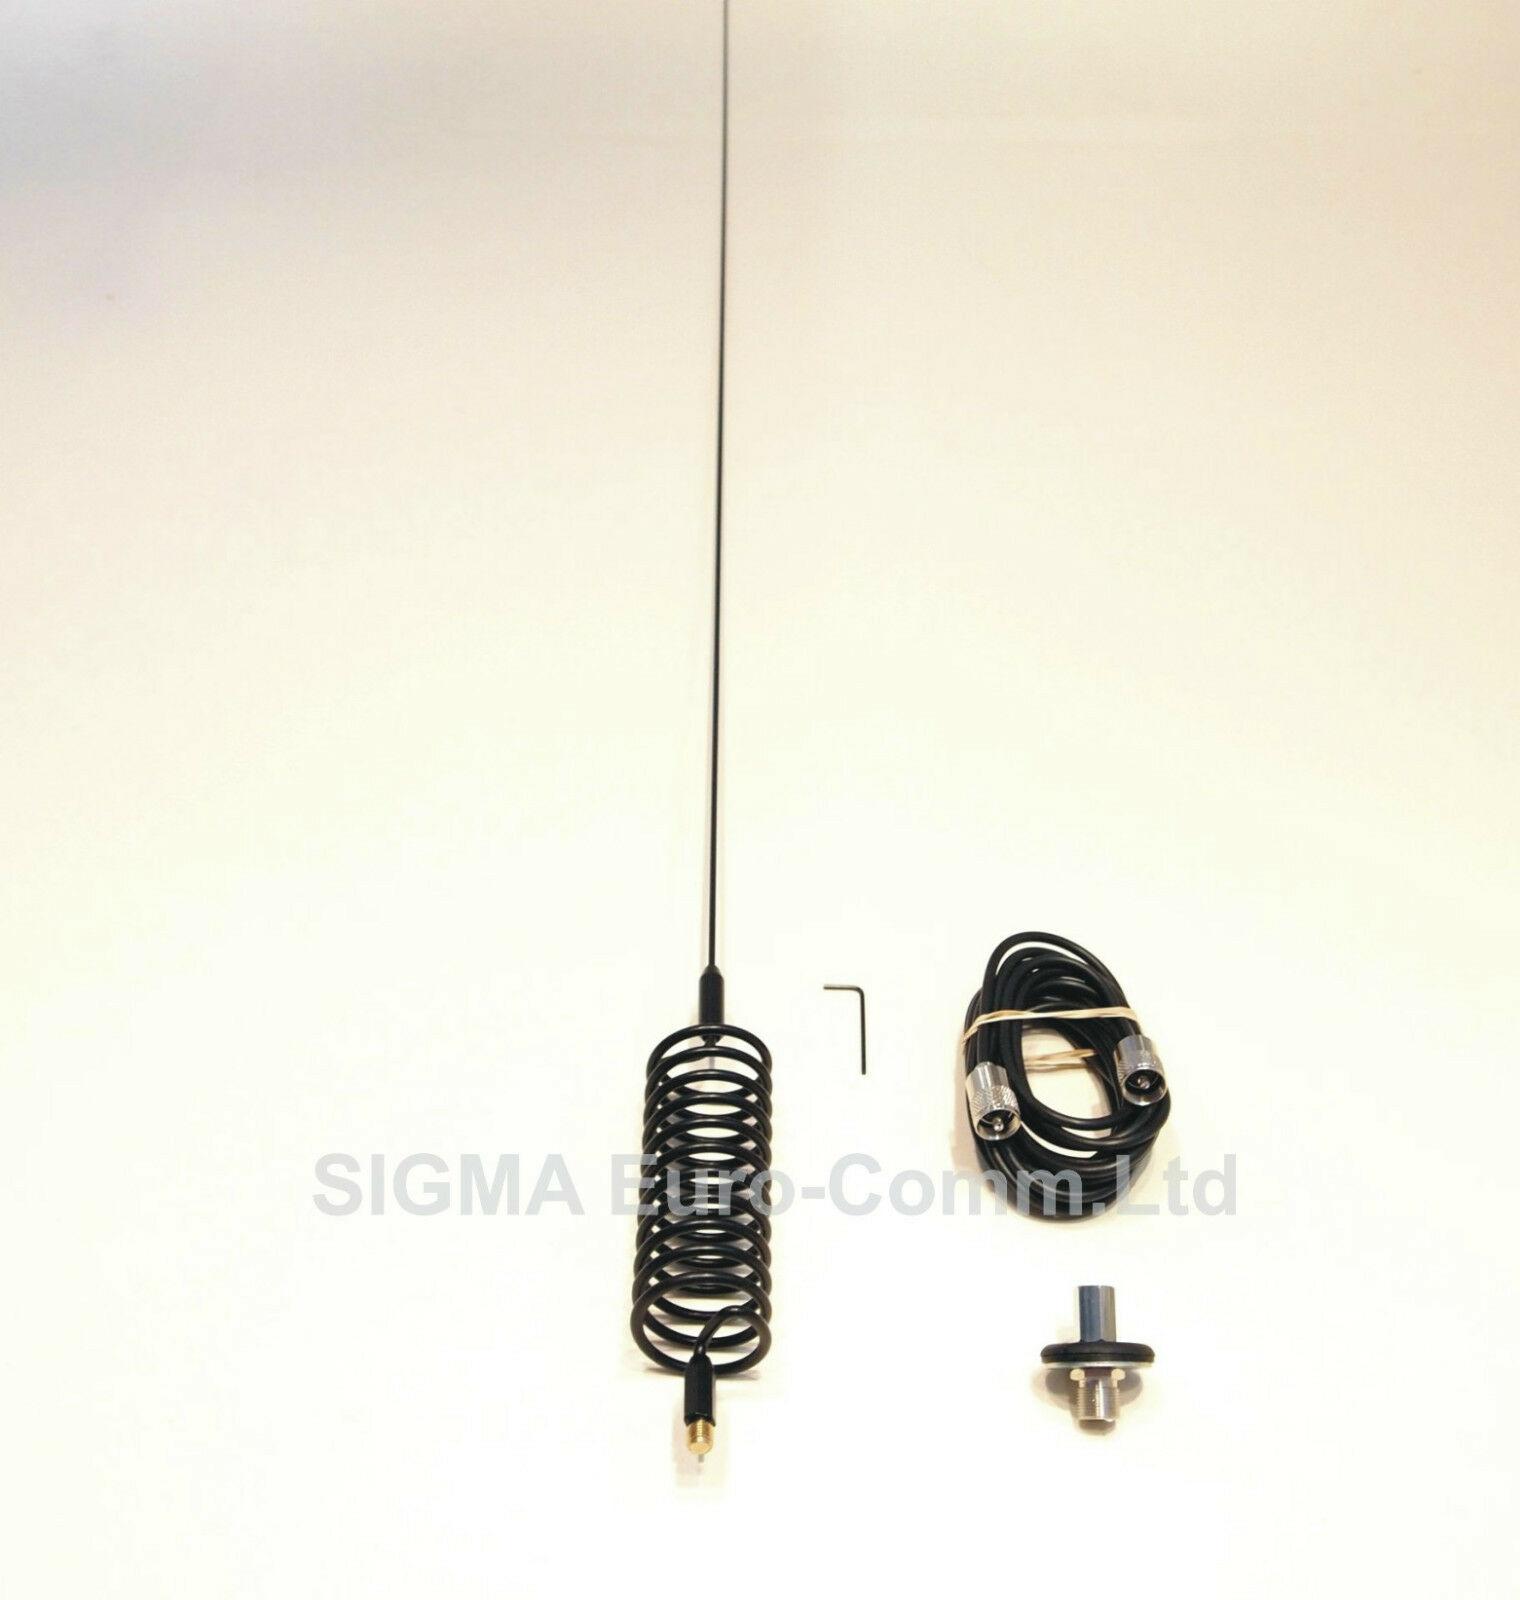 Springer Stinger CB Antenna + Large Washer Body Mounting Kit CB Radio Aerial